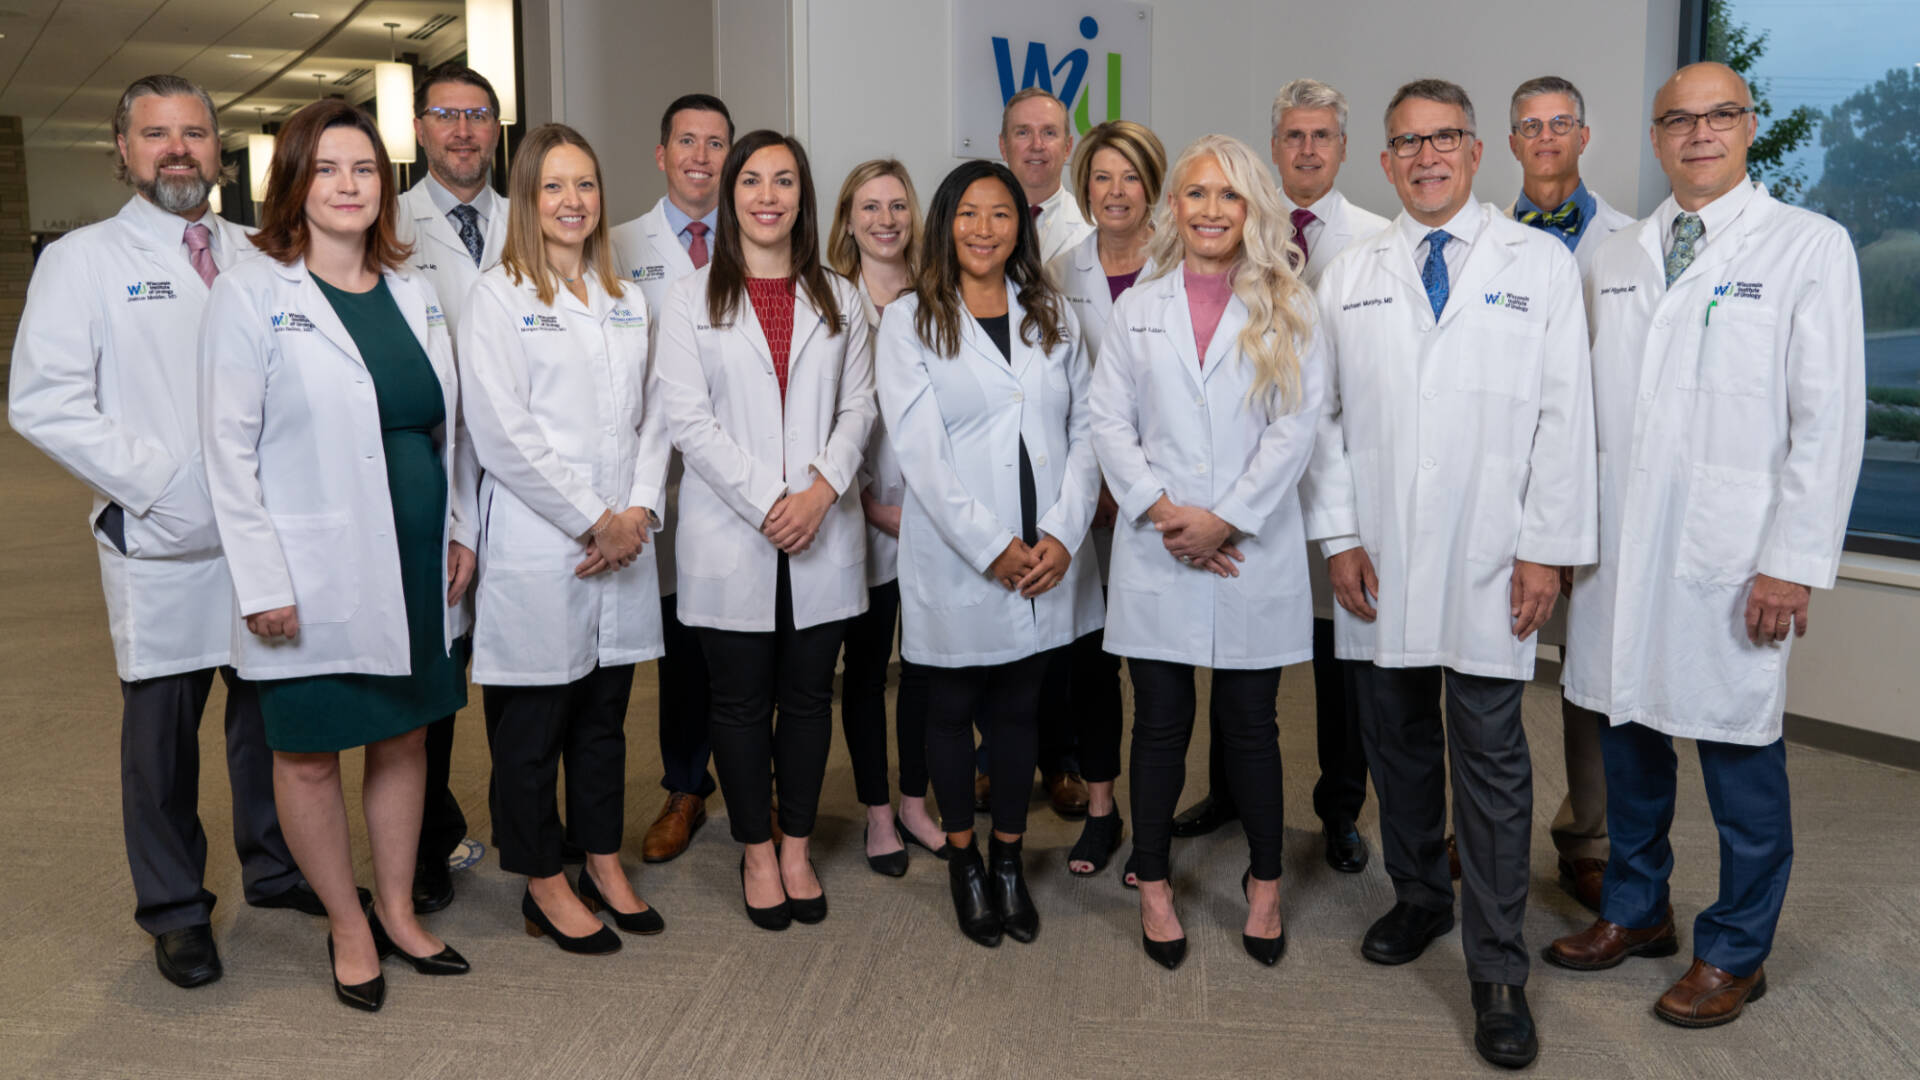 The Wisconsin Institute of Urology Urologists Team serves patients in Neenah, Oshkosh, Fond Du Lac, New London, Shawano, & Waupaca, Wisconsin